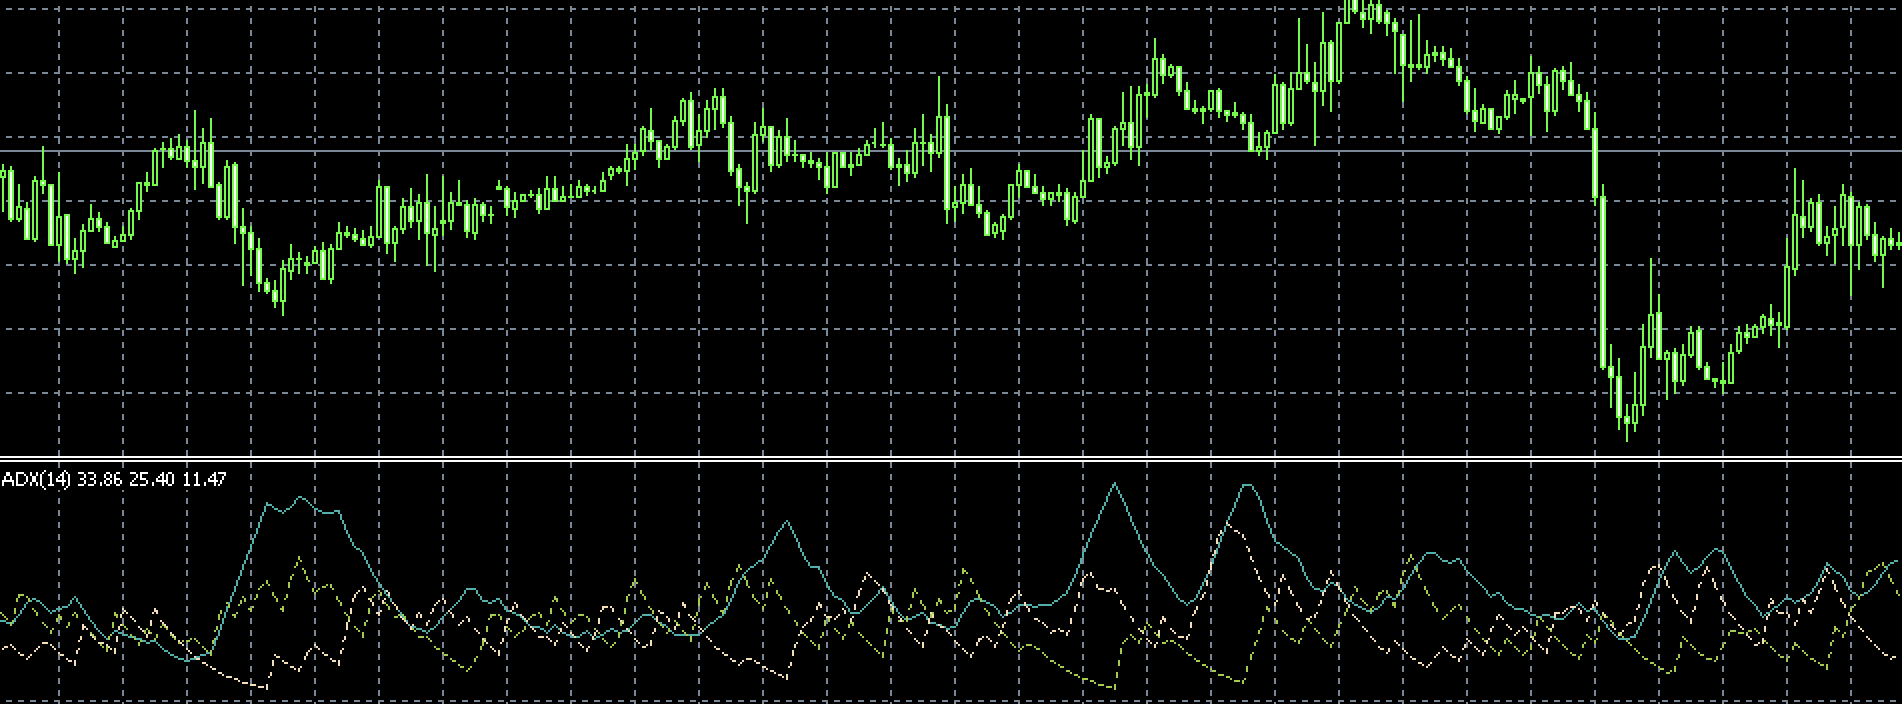 The Vantage Markets MetaTrader 5 chart with ADX indicator